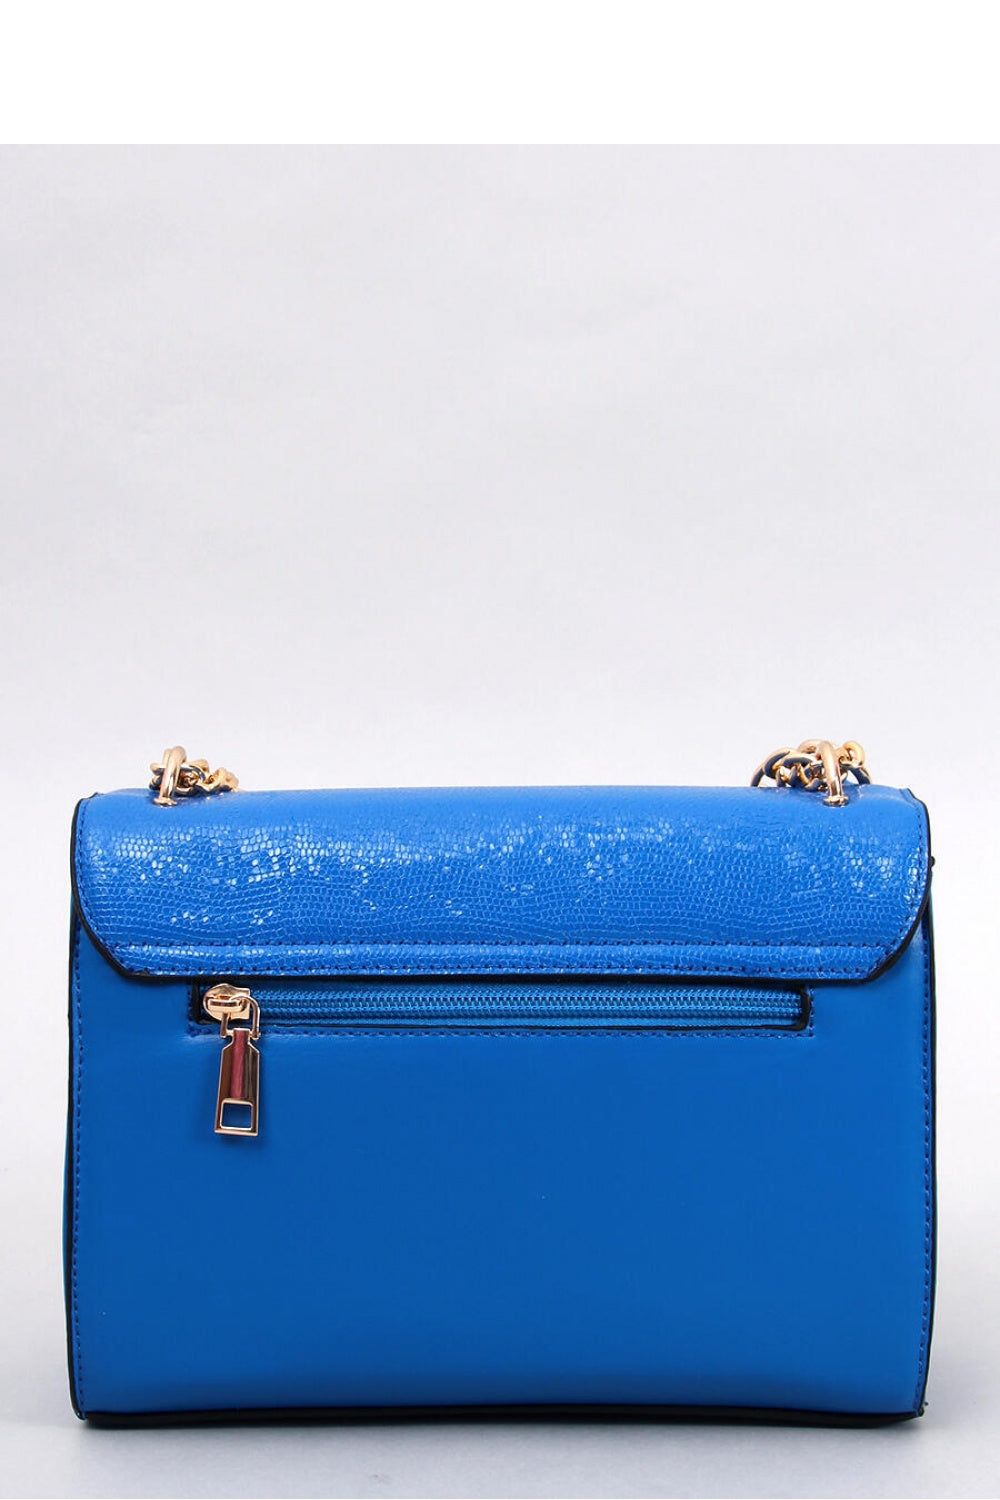 Messenger bag model 180354 Elsy Style Casual Handbags, Shoulder Bags